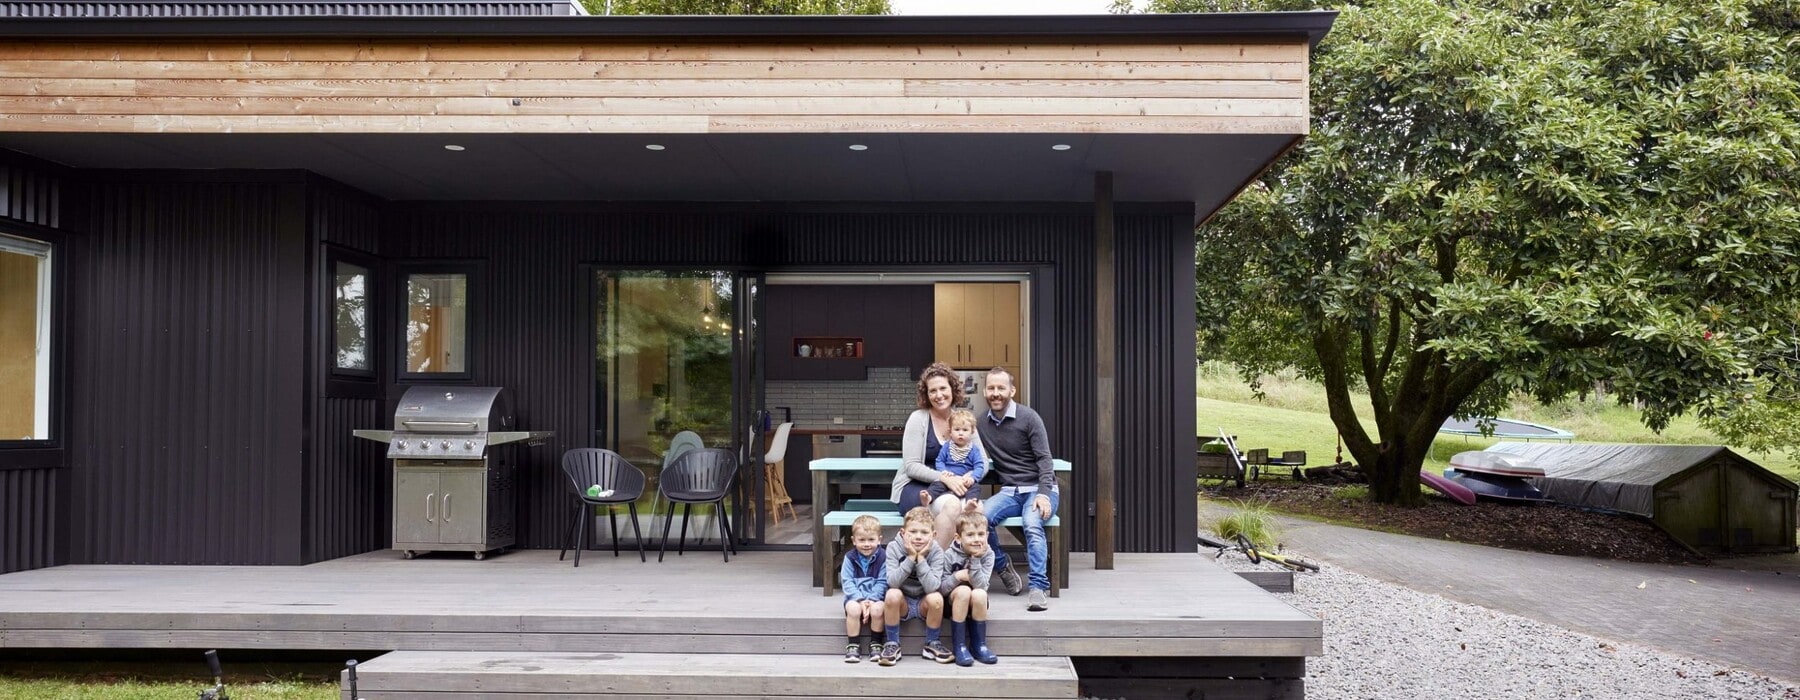 Family-sitting-Tauranga-garden-home-scaled